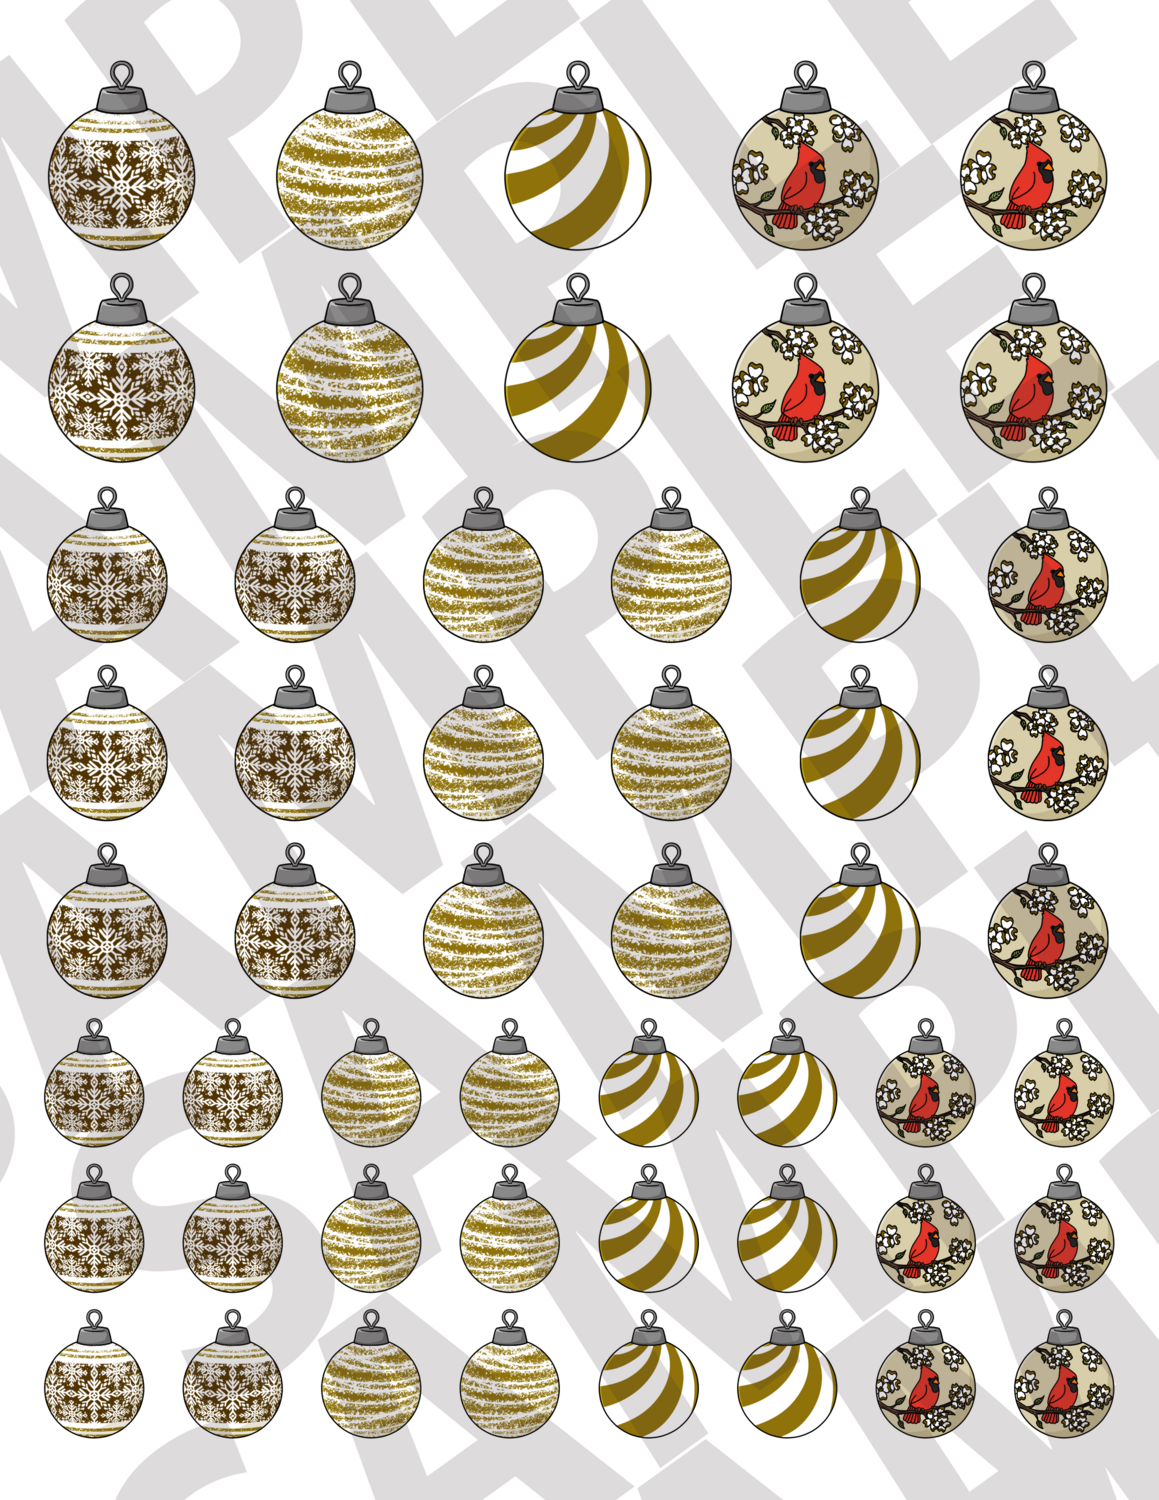 Dark Yellow - Smaller Ornaments